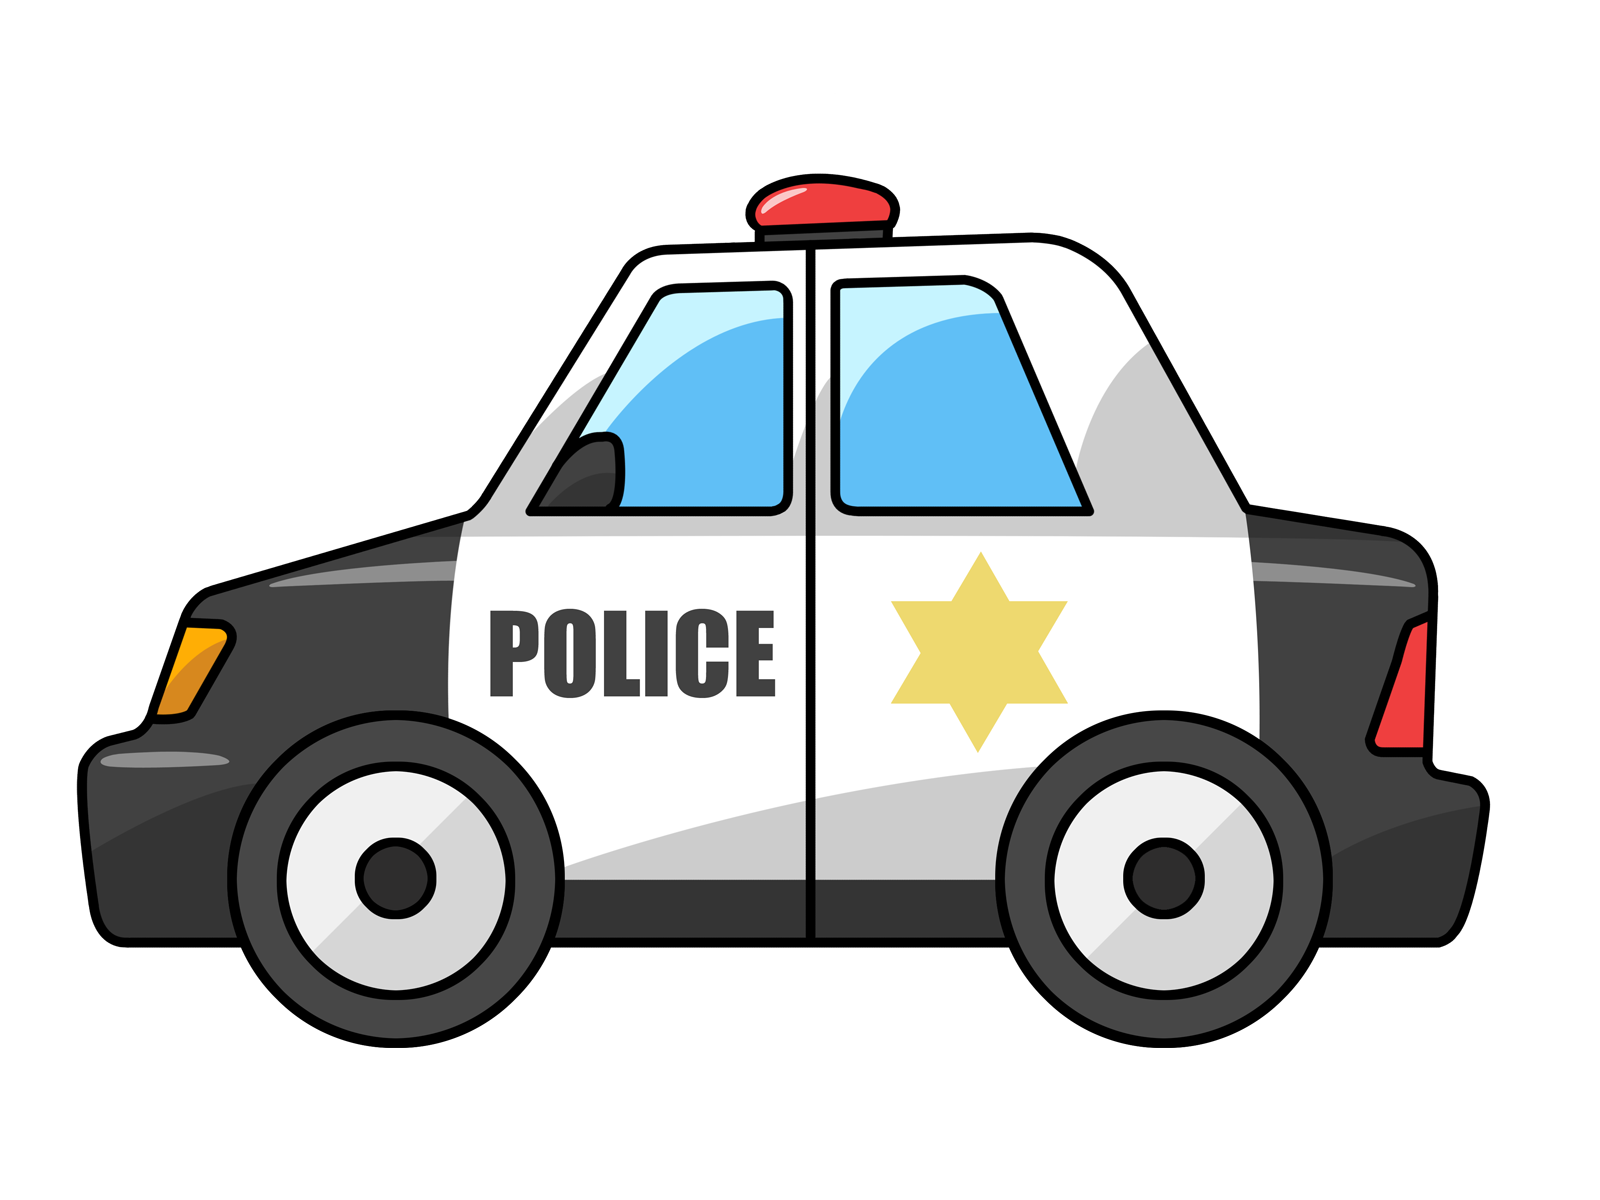 ... police car - illustration